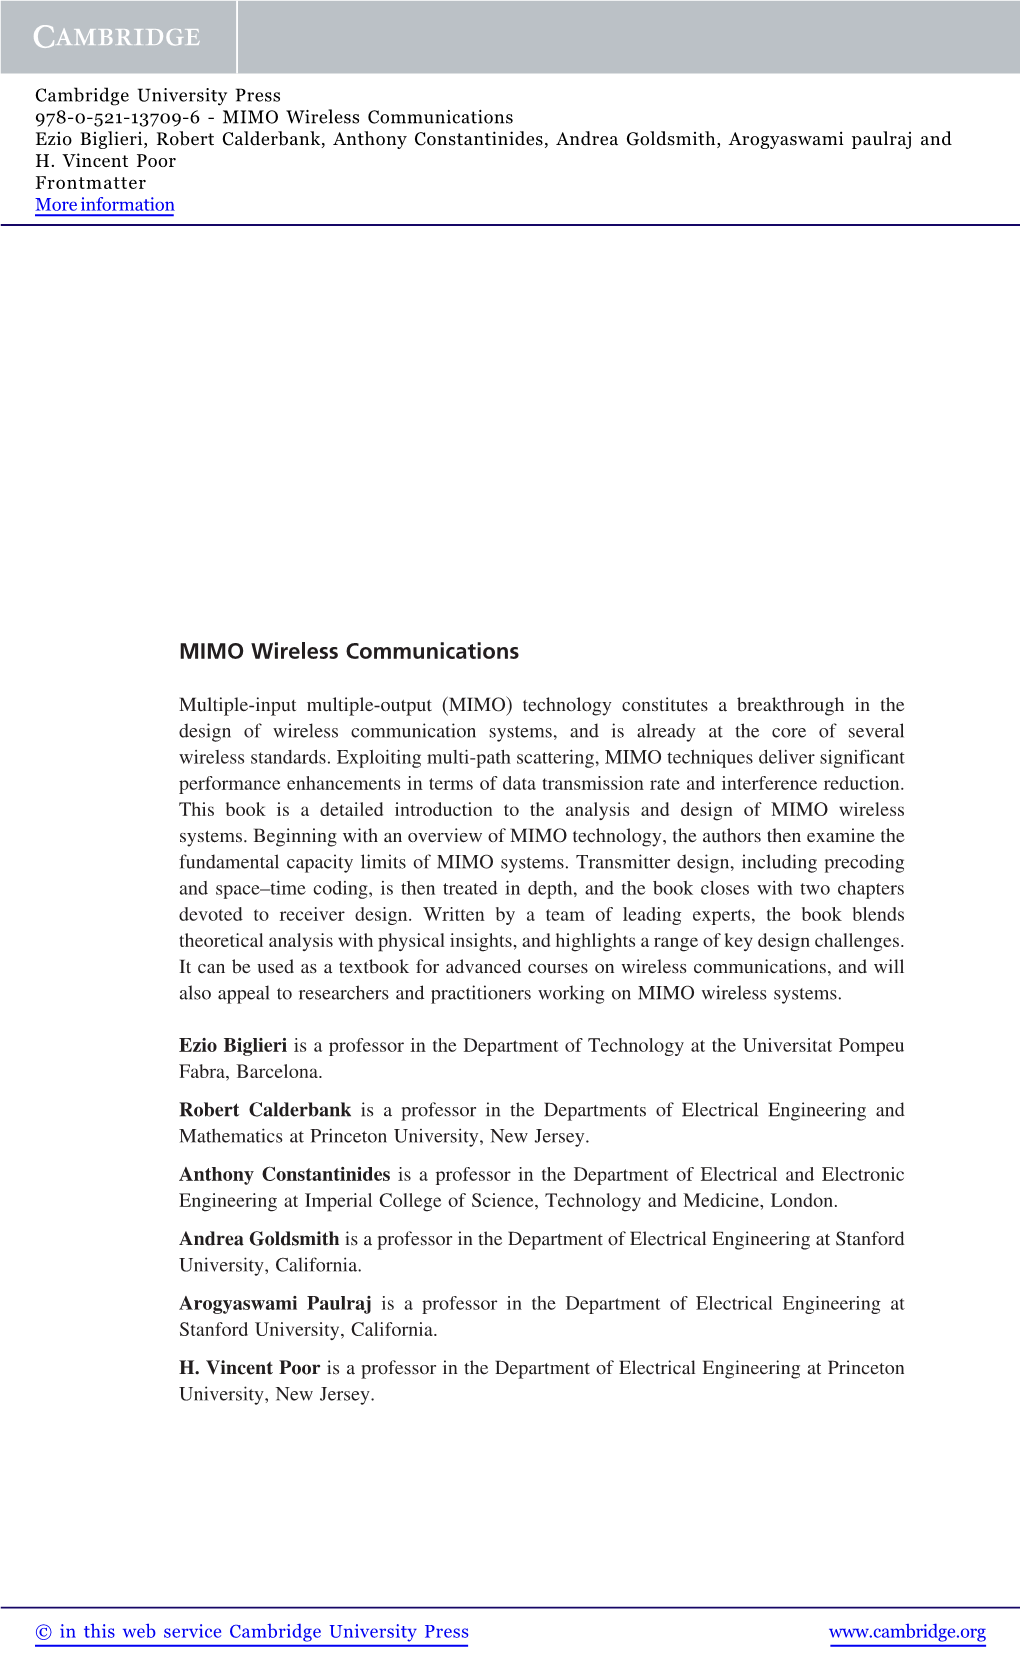 MIMO Wireless Communications Ezio Biglieri, Robert Calderbank, Anthony Constantinides, Andrea Goldsmith, Arogyaswami Paulraj and H